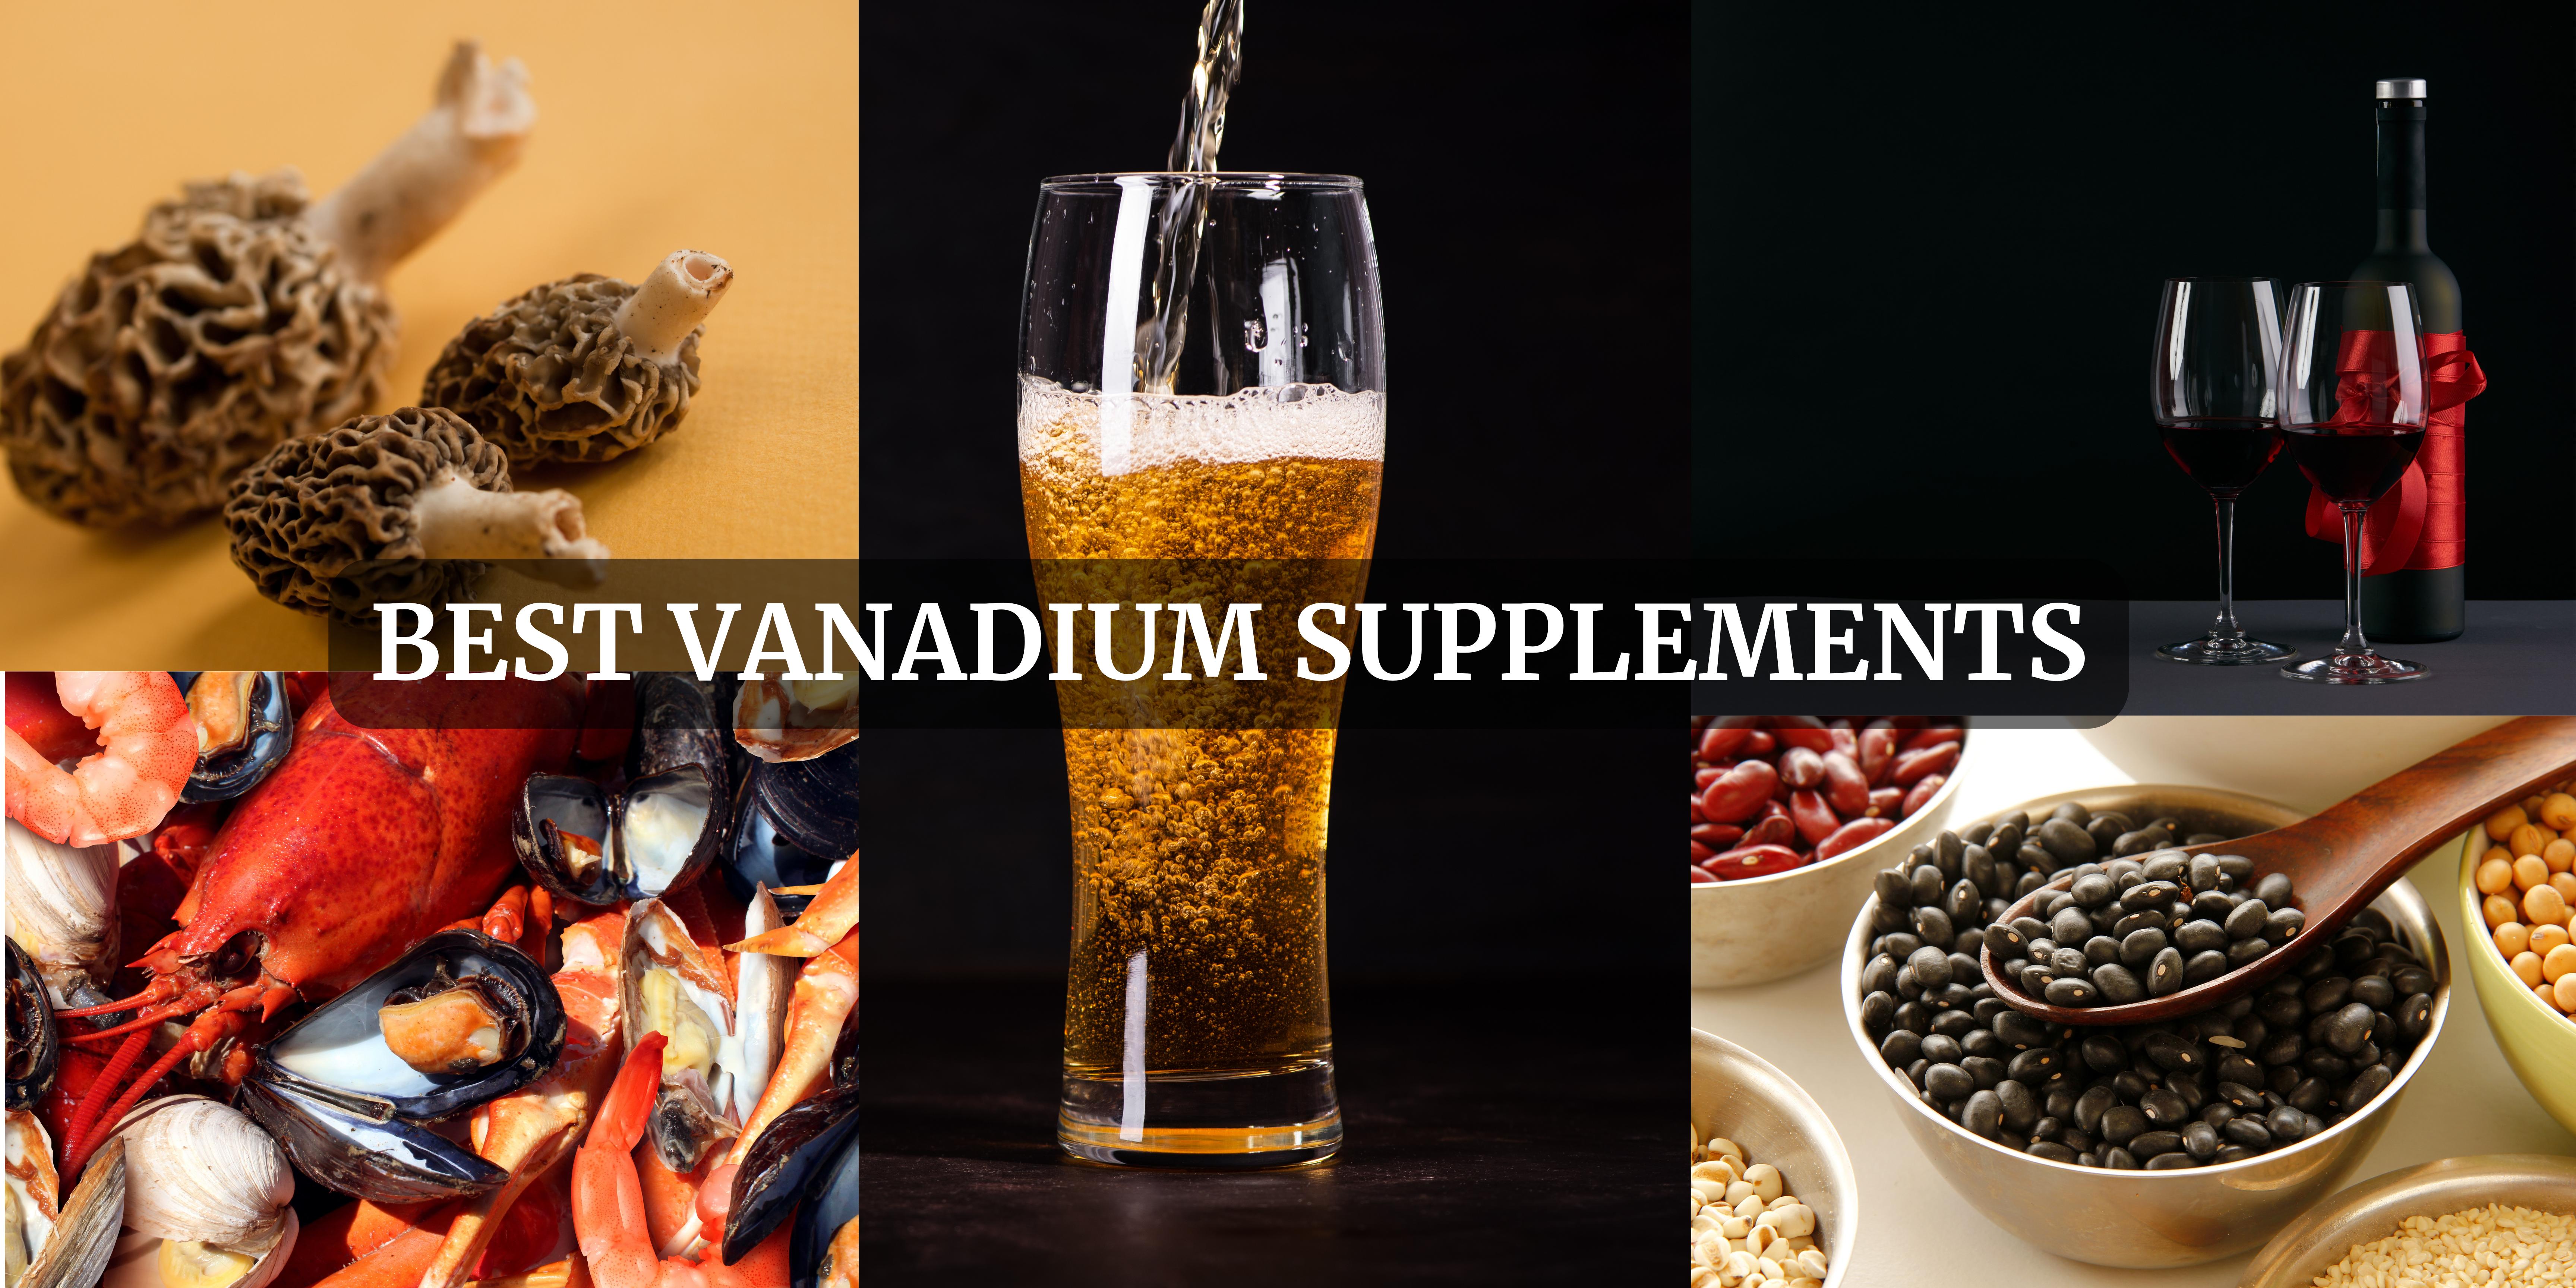 Vanadium Supplements in France